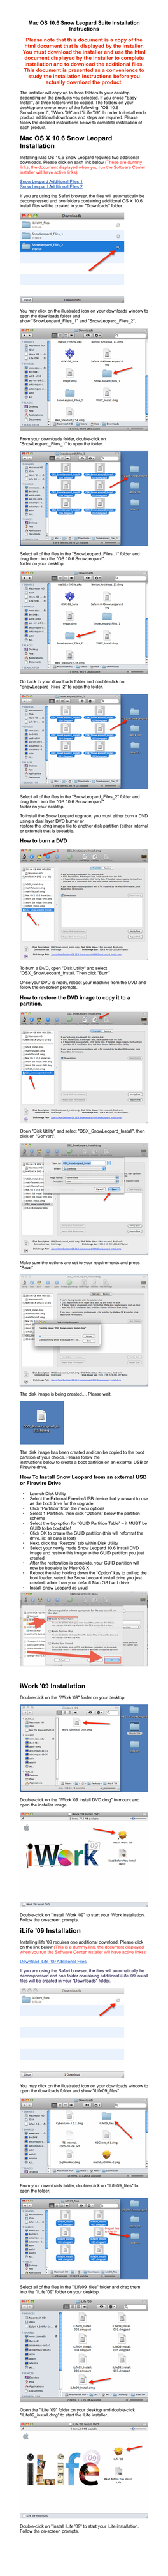 Mac OS X 10.6 Snow Leopard Installation